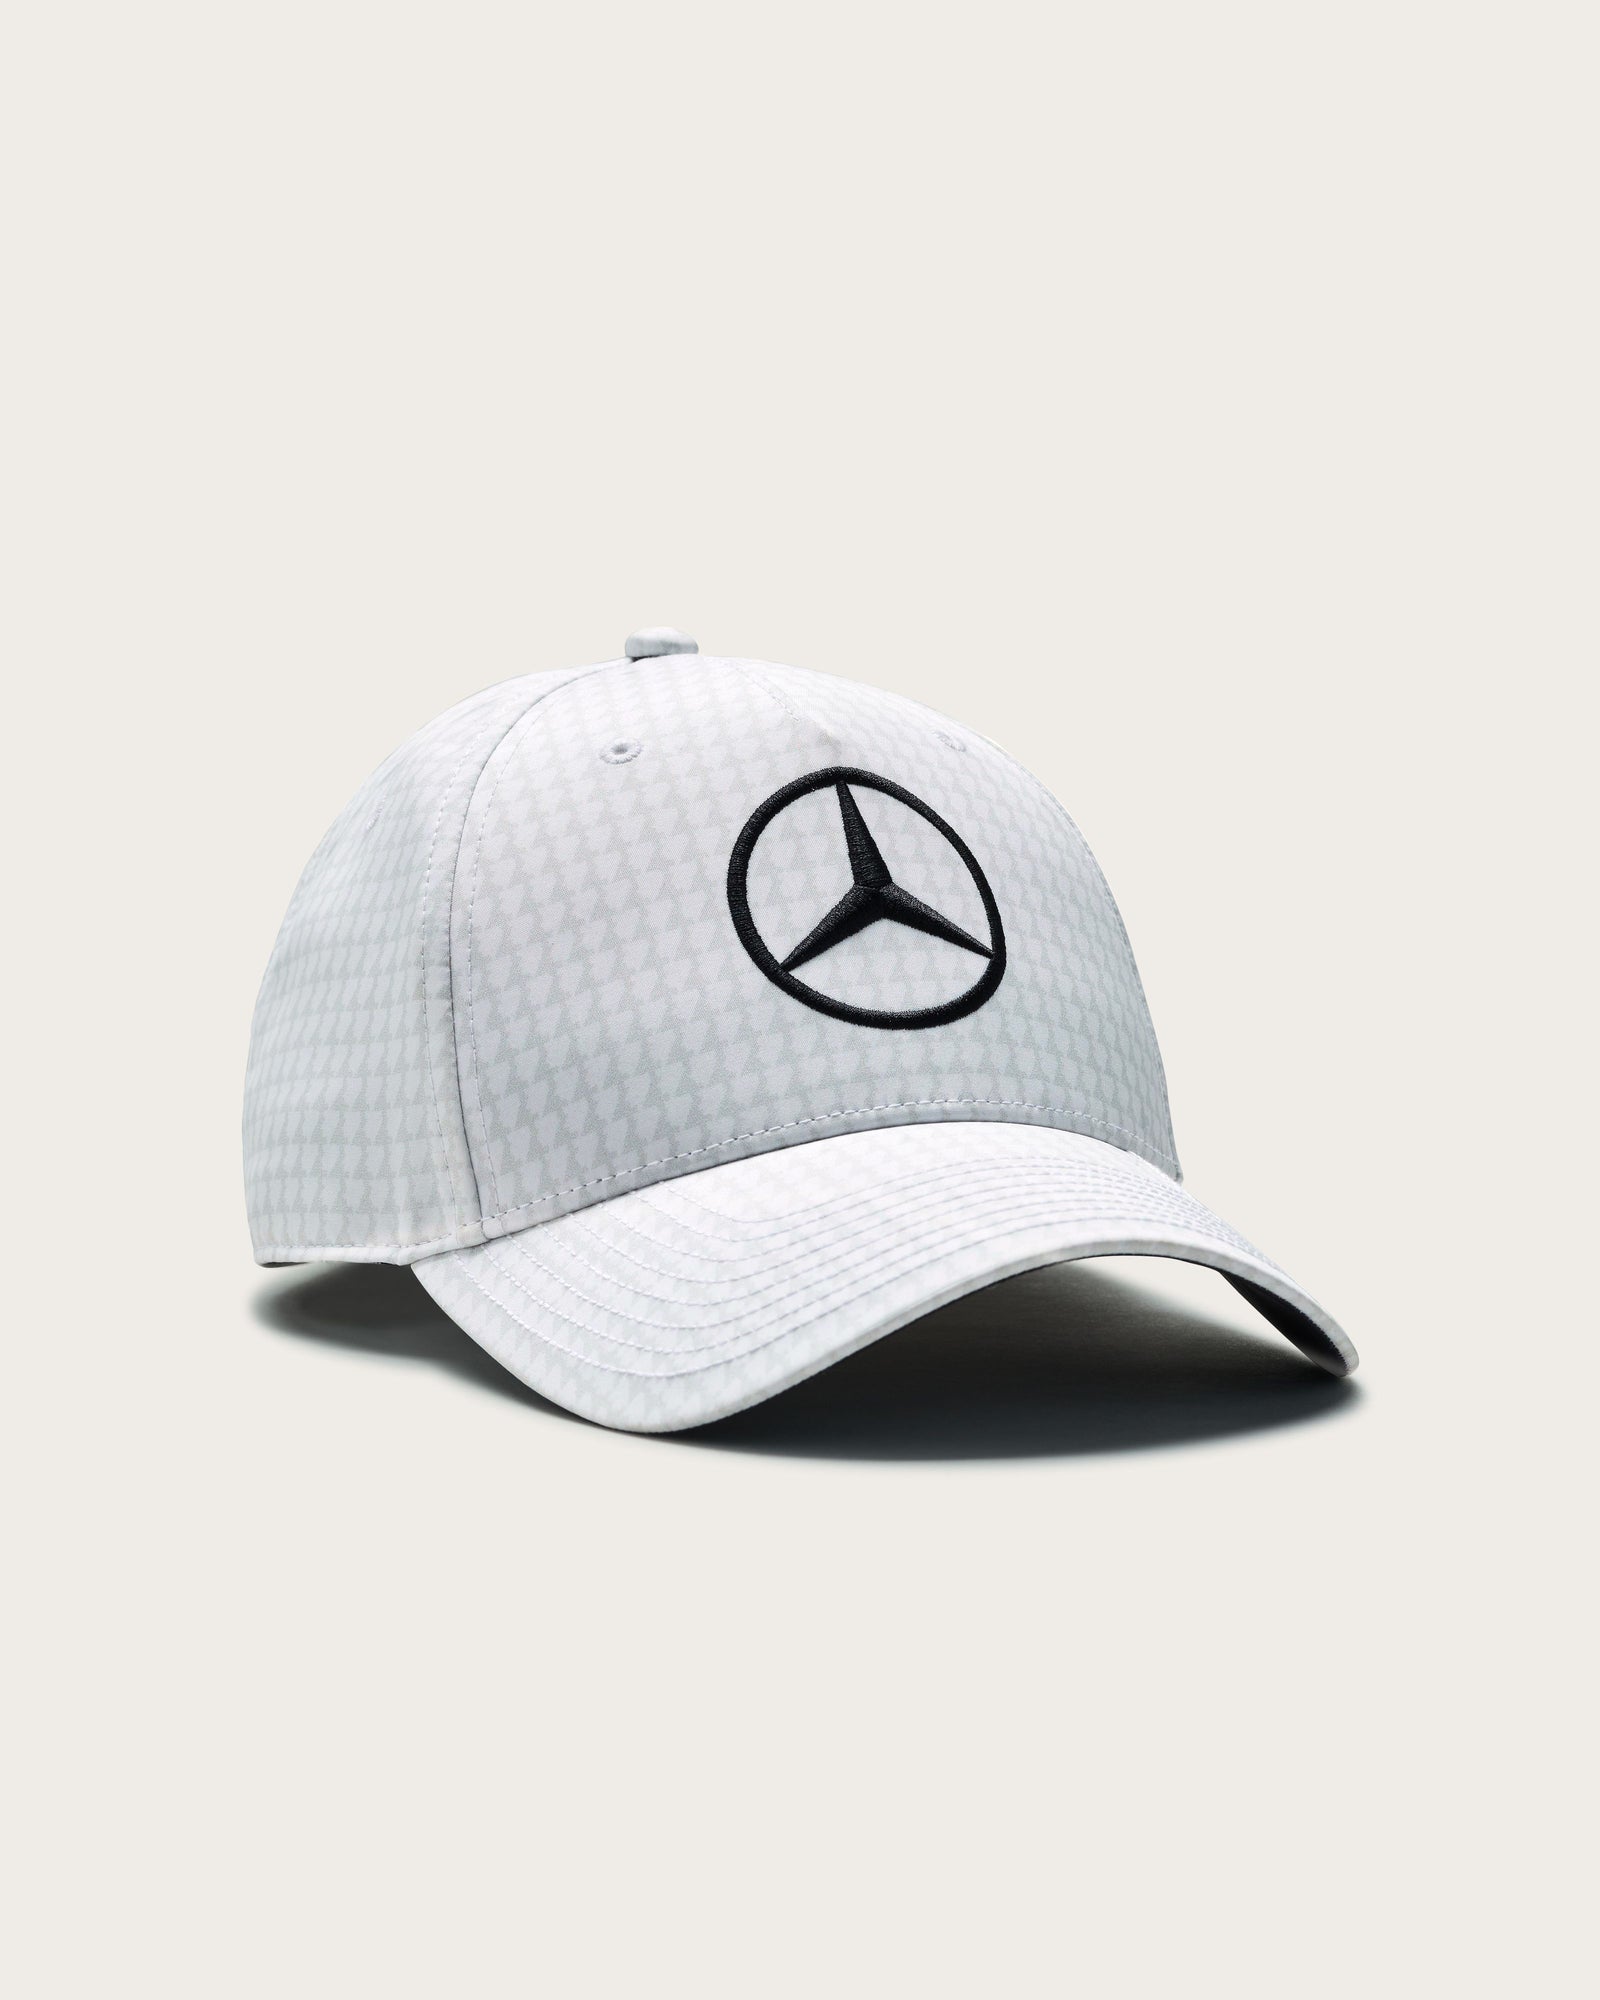 Mercedes F1 Team Mercedes-AMG Official Merchandise | Store F1